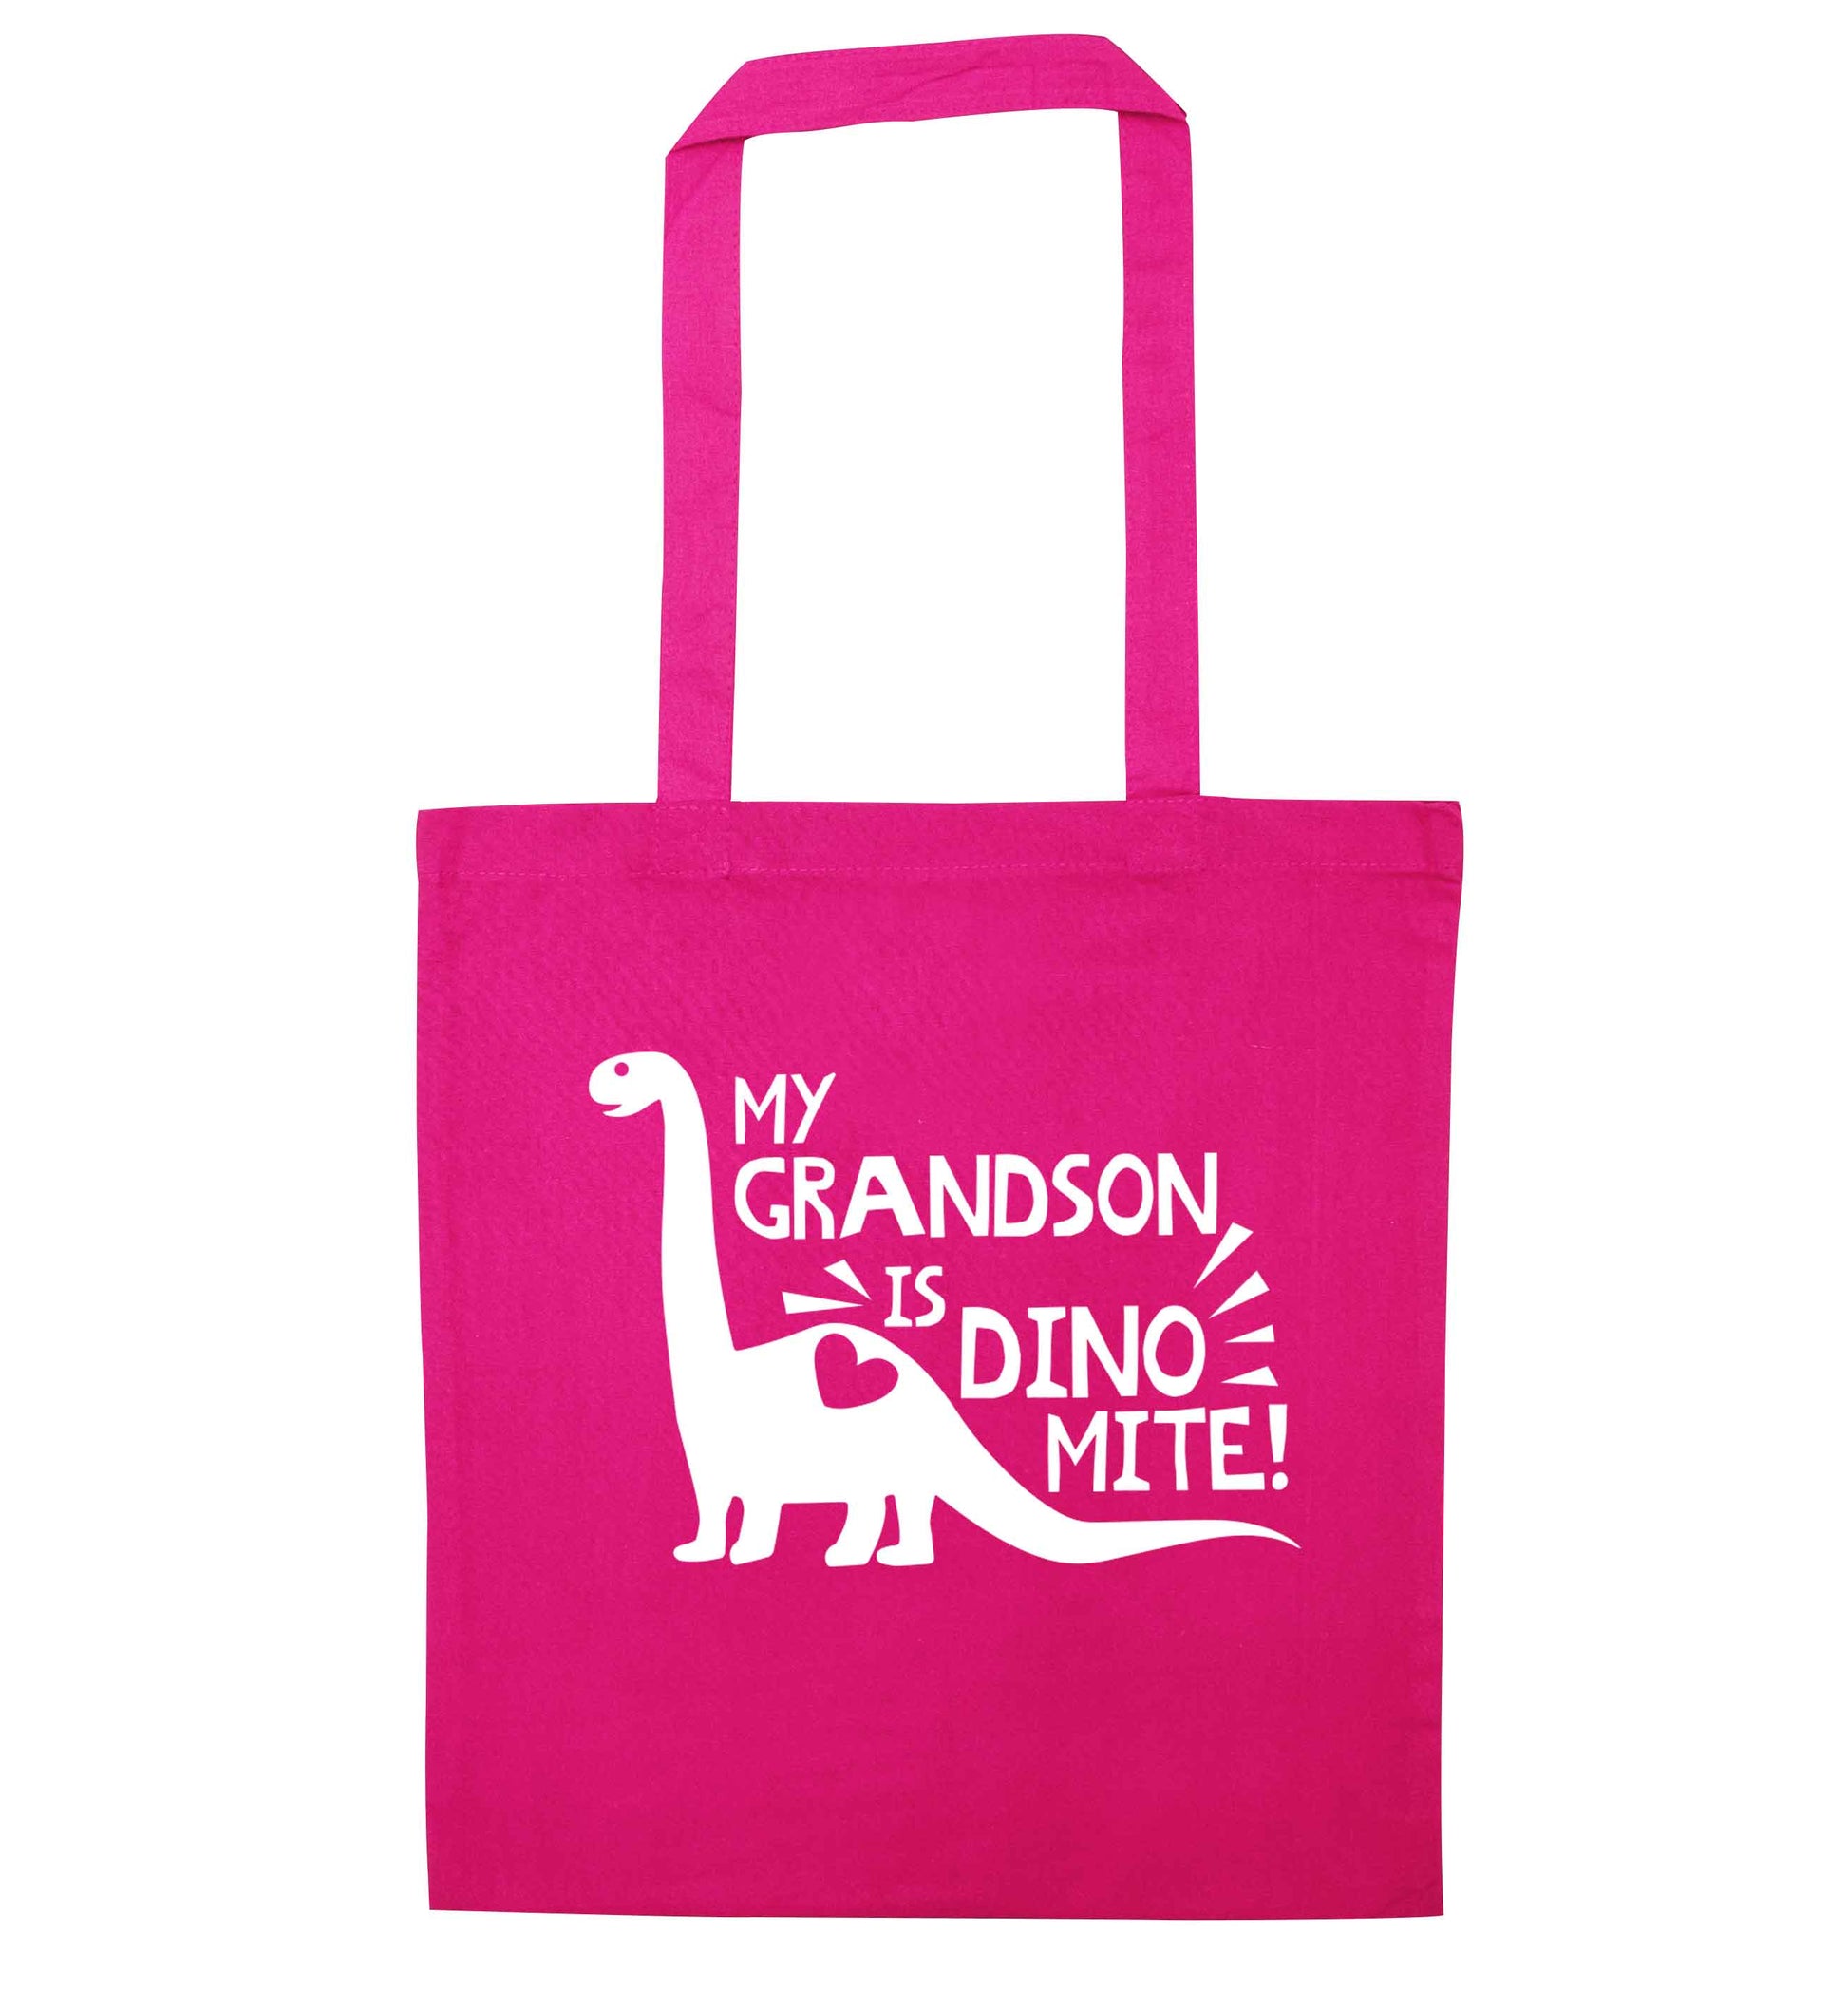 My grandson is dinomite! pink tote bag